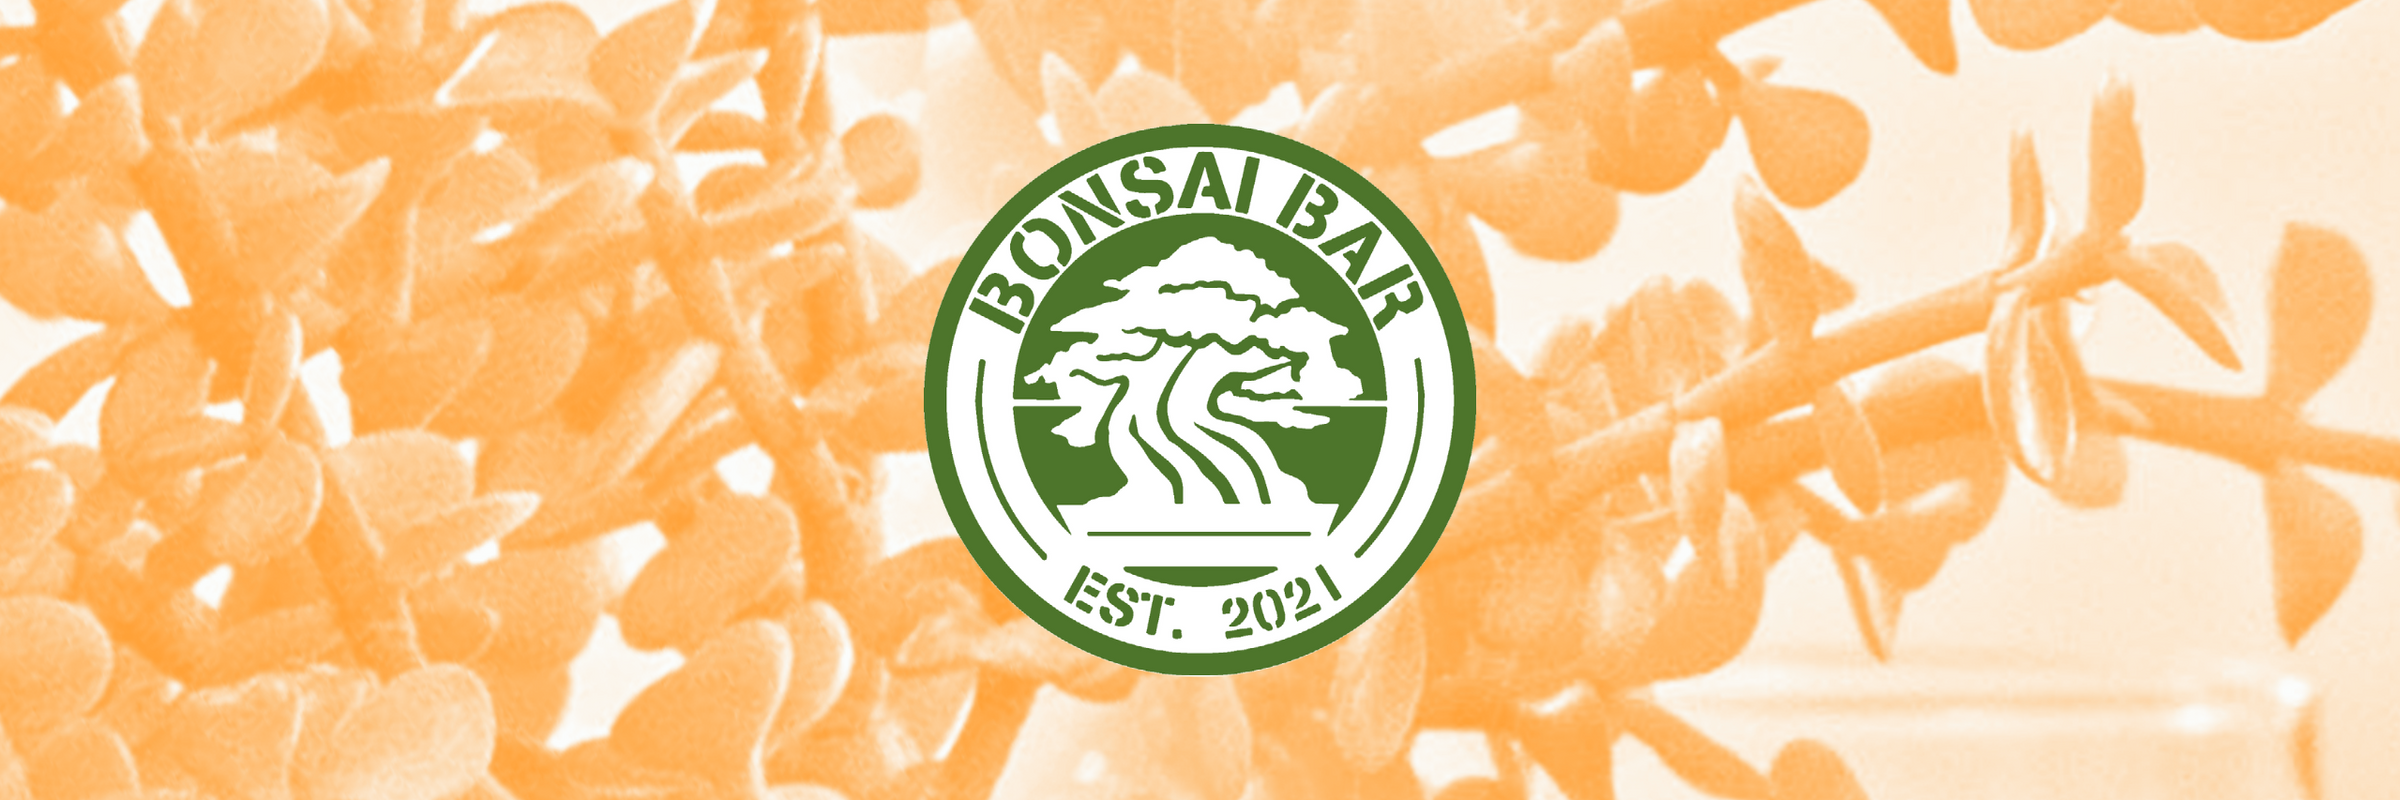 Bonsai Bar's Repotting Workshops